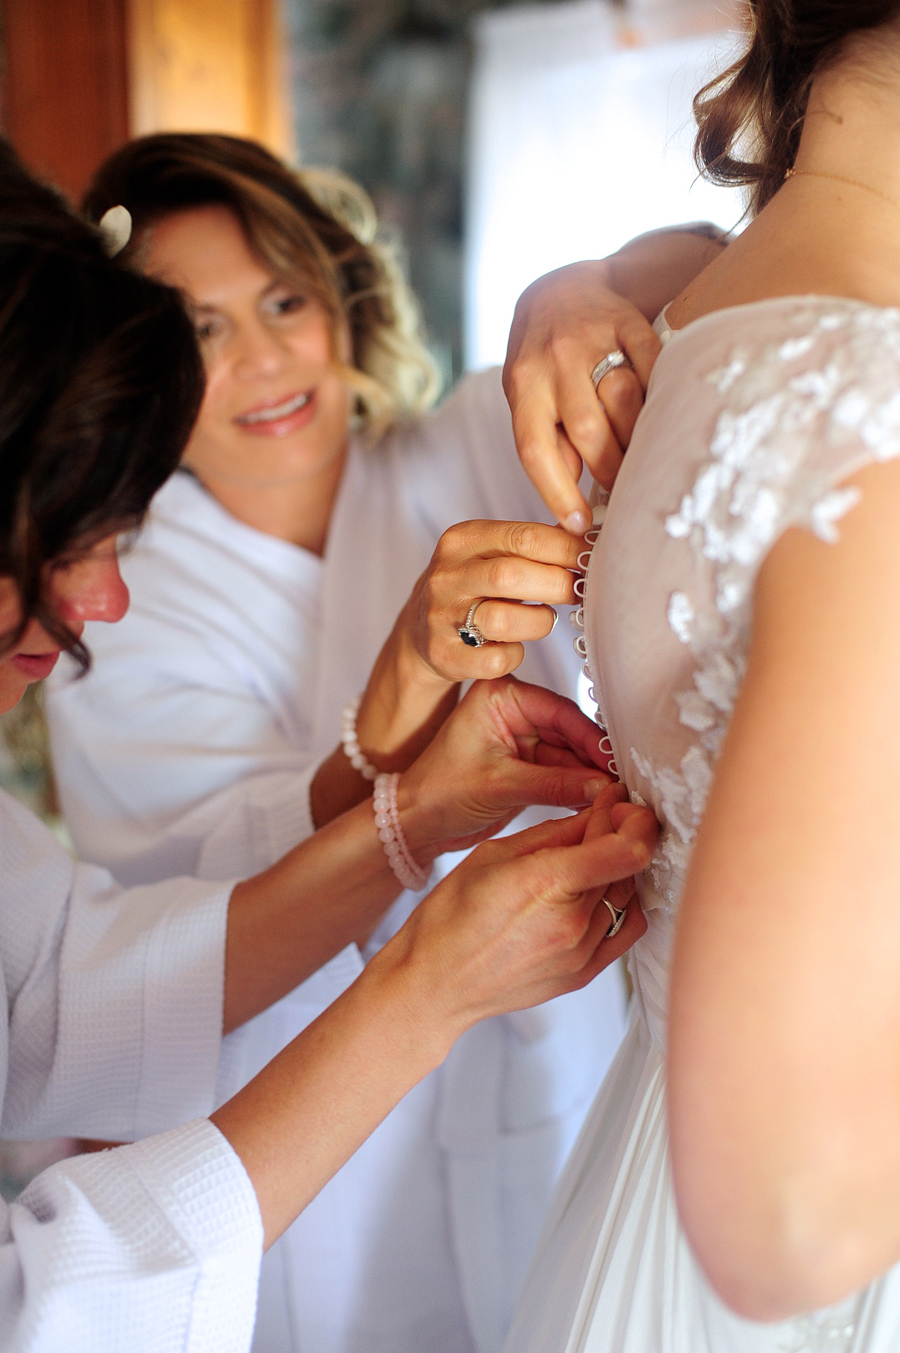 bridesmaid buttoning up bride's wedding dress